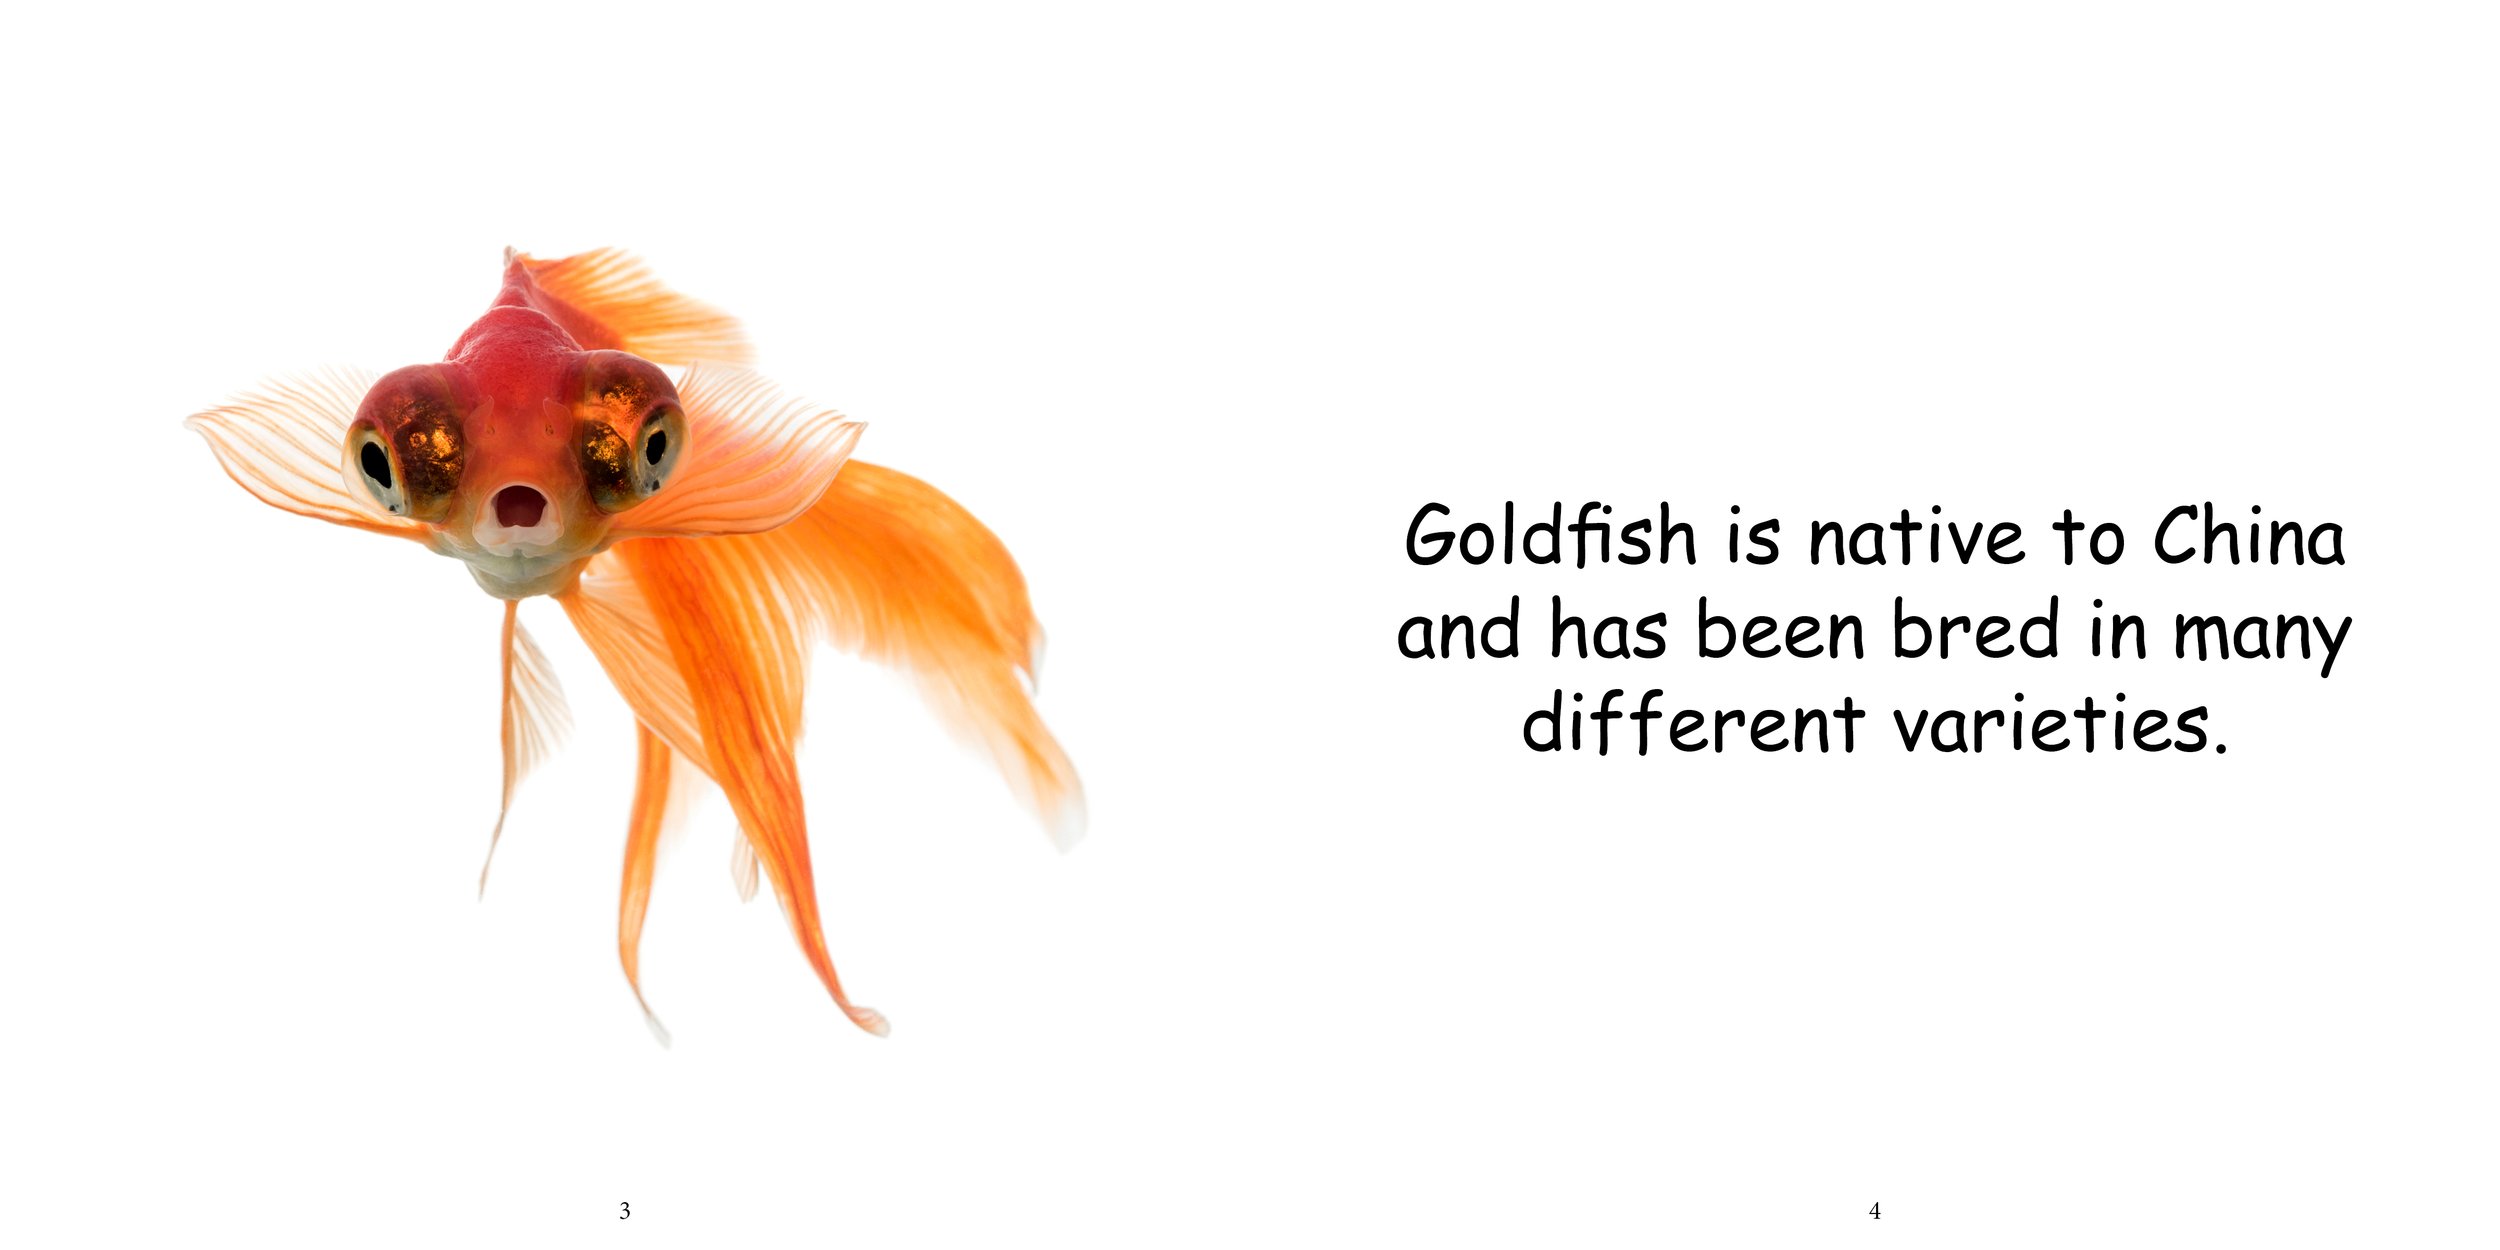 Everything about Goldfish6.jpg